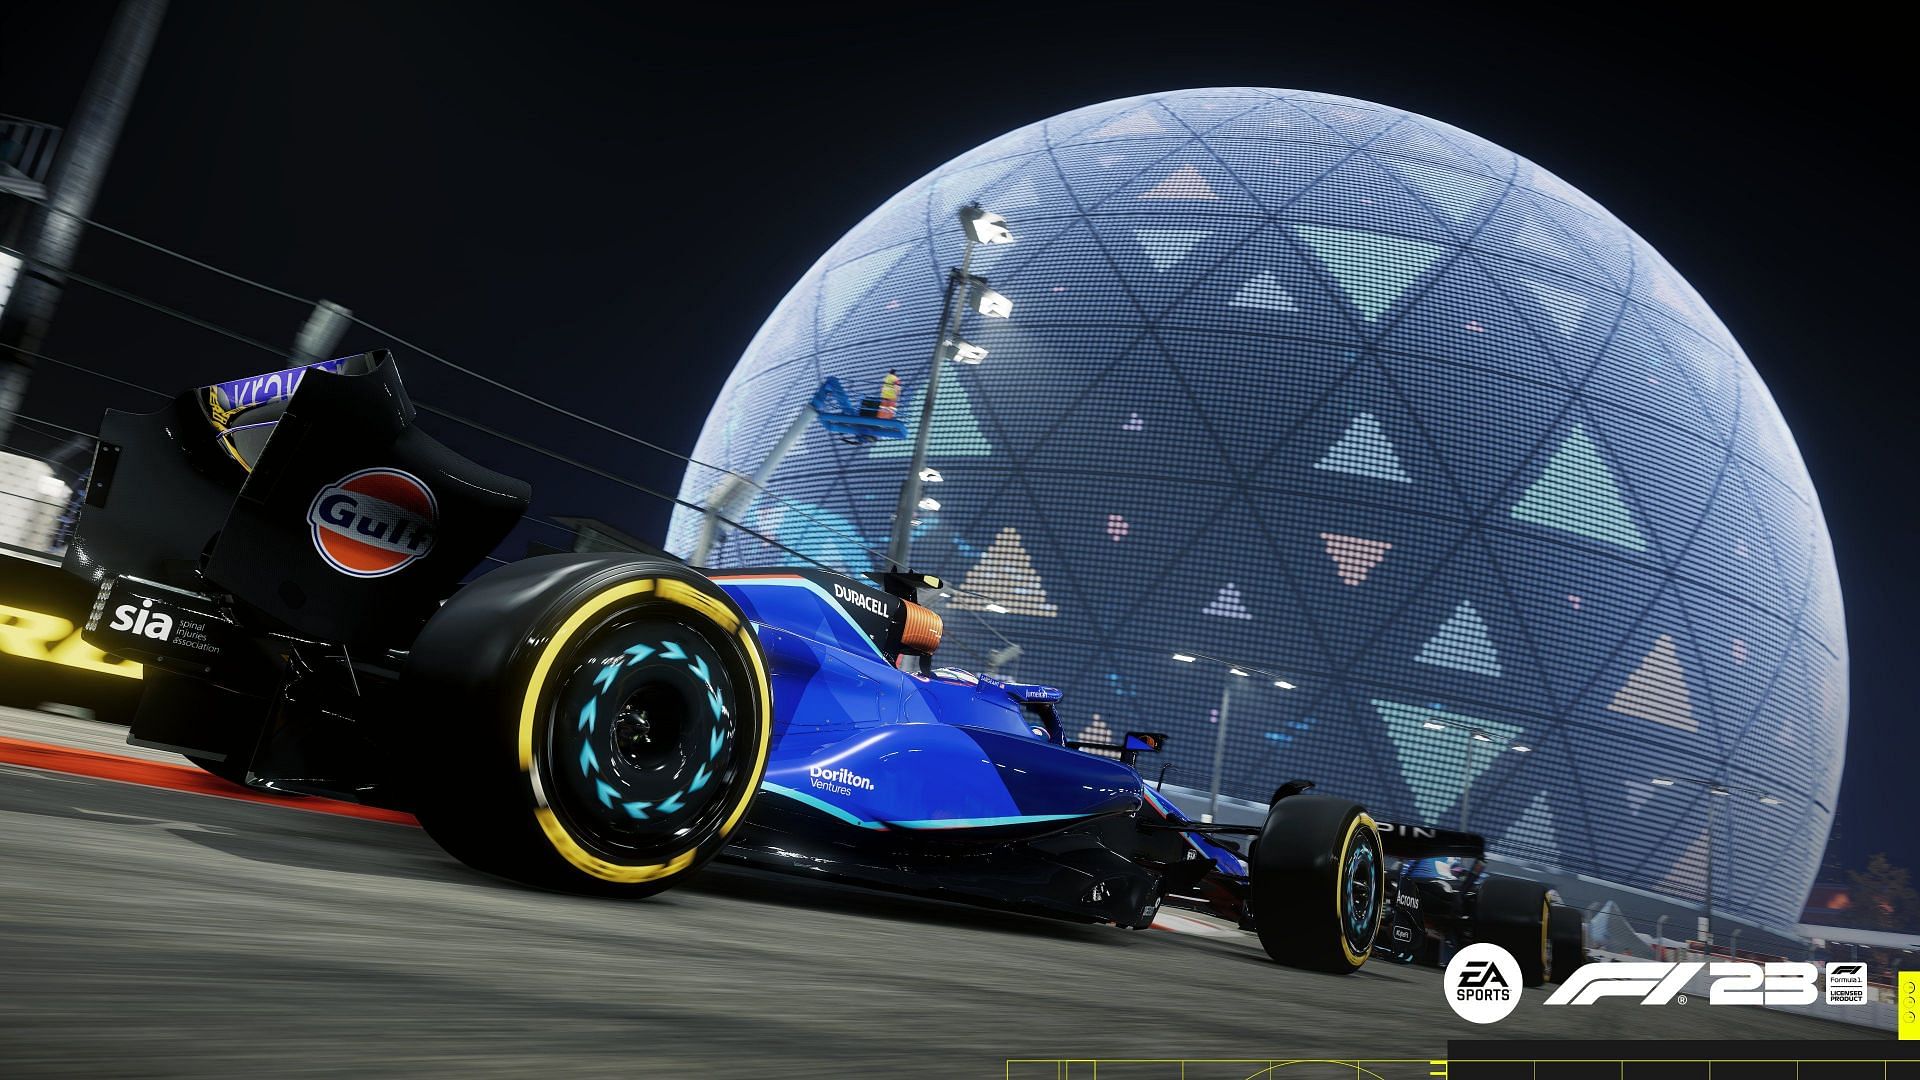 Screenshot from EA F1 23 [Image: EA Sports F1 on Twitter]